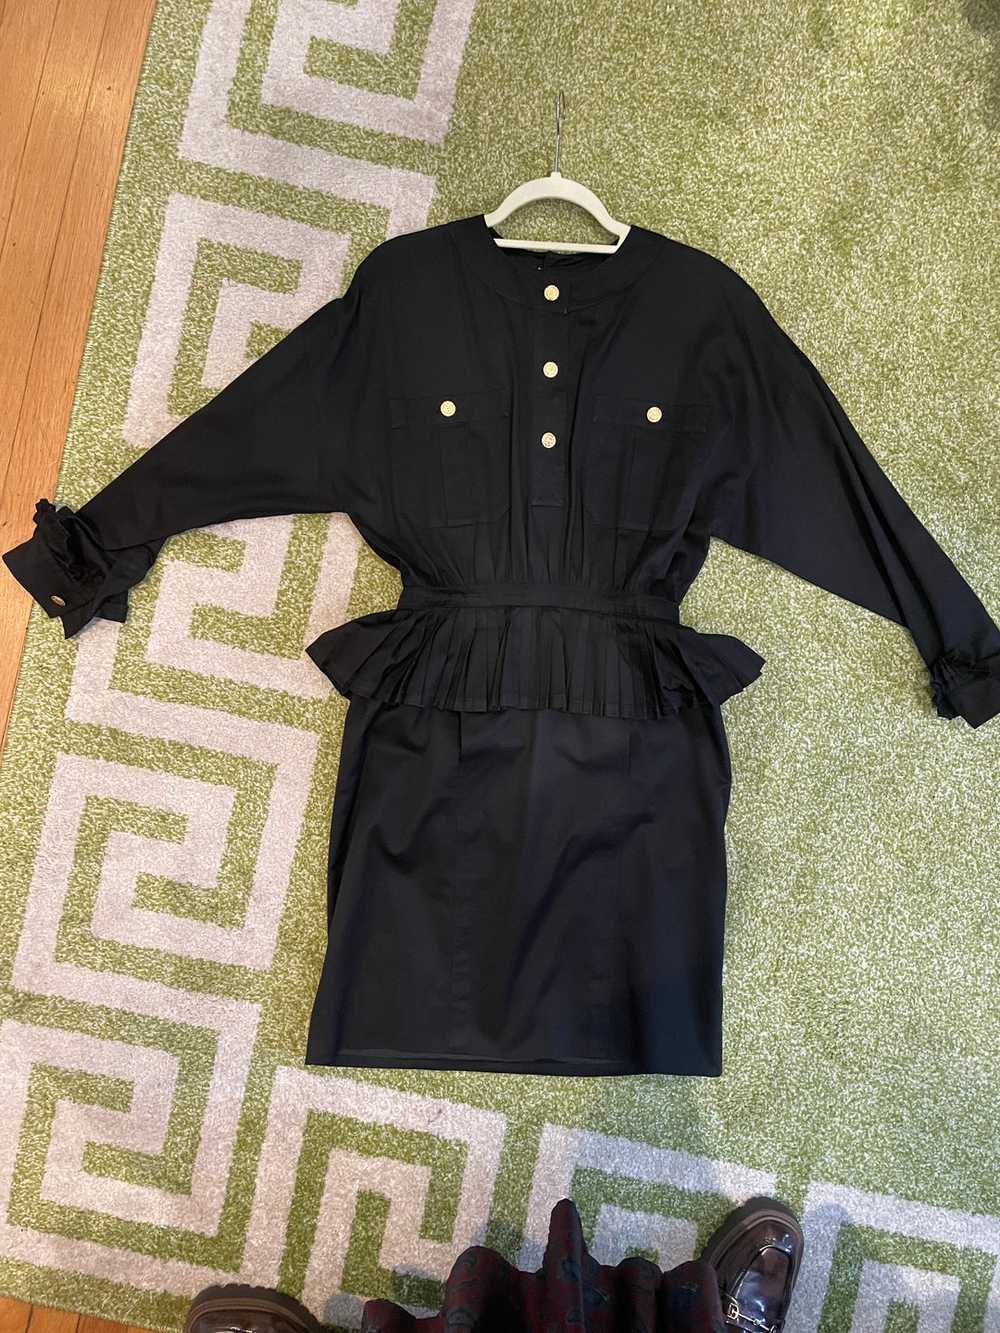 Chanel Black Cotton Dress (Size 4) - image 7